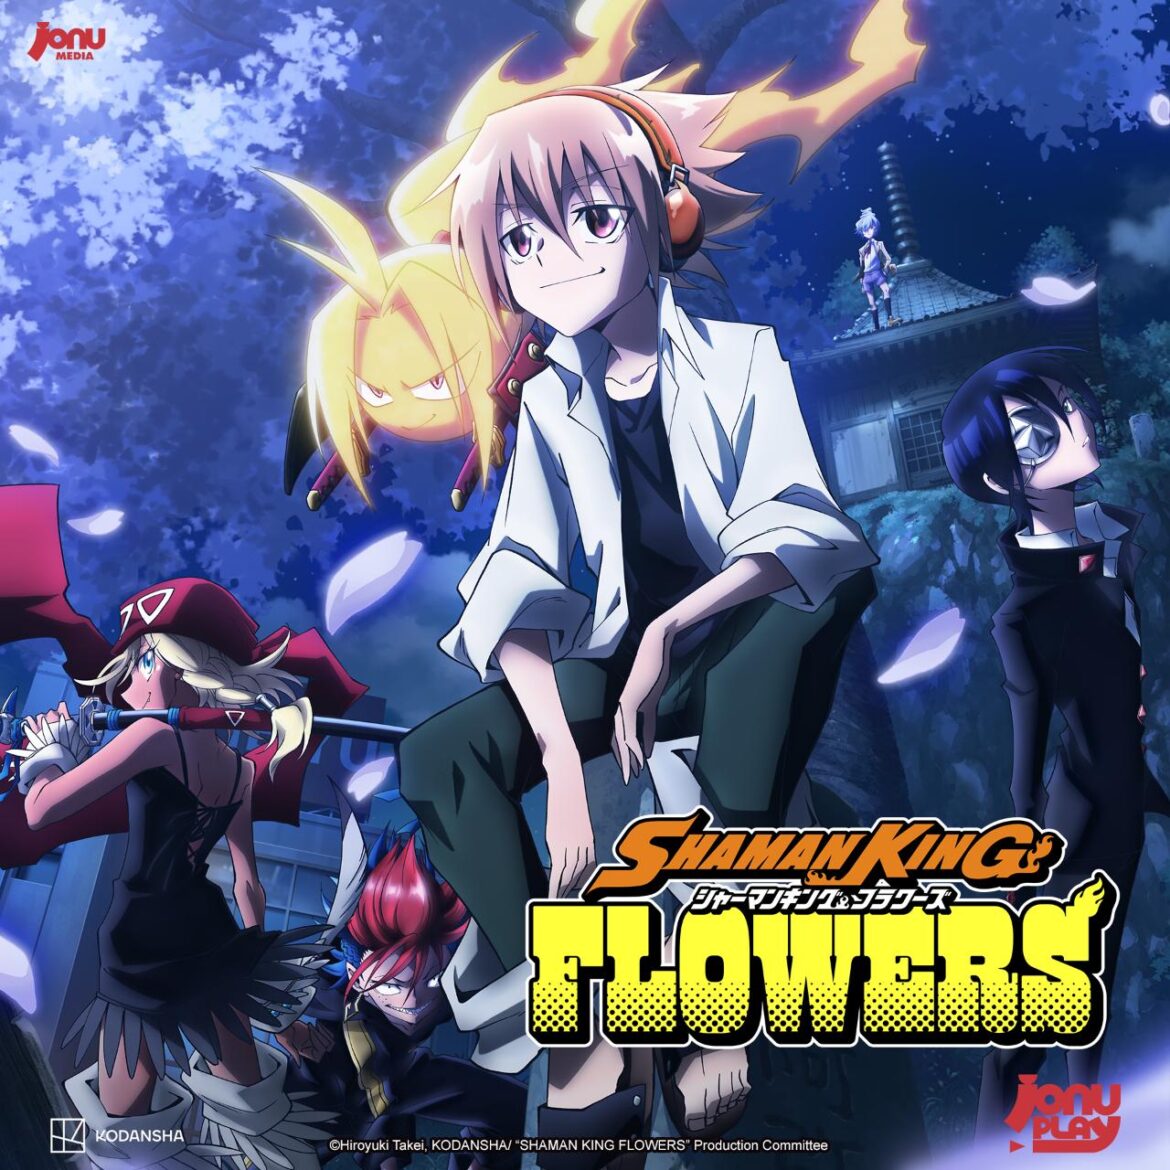 Shaman King Flowers (anime)